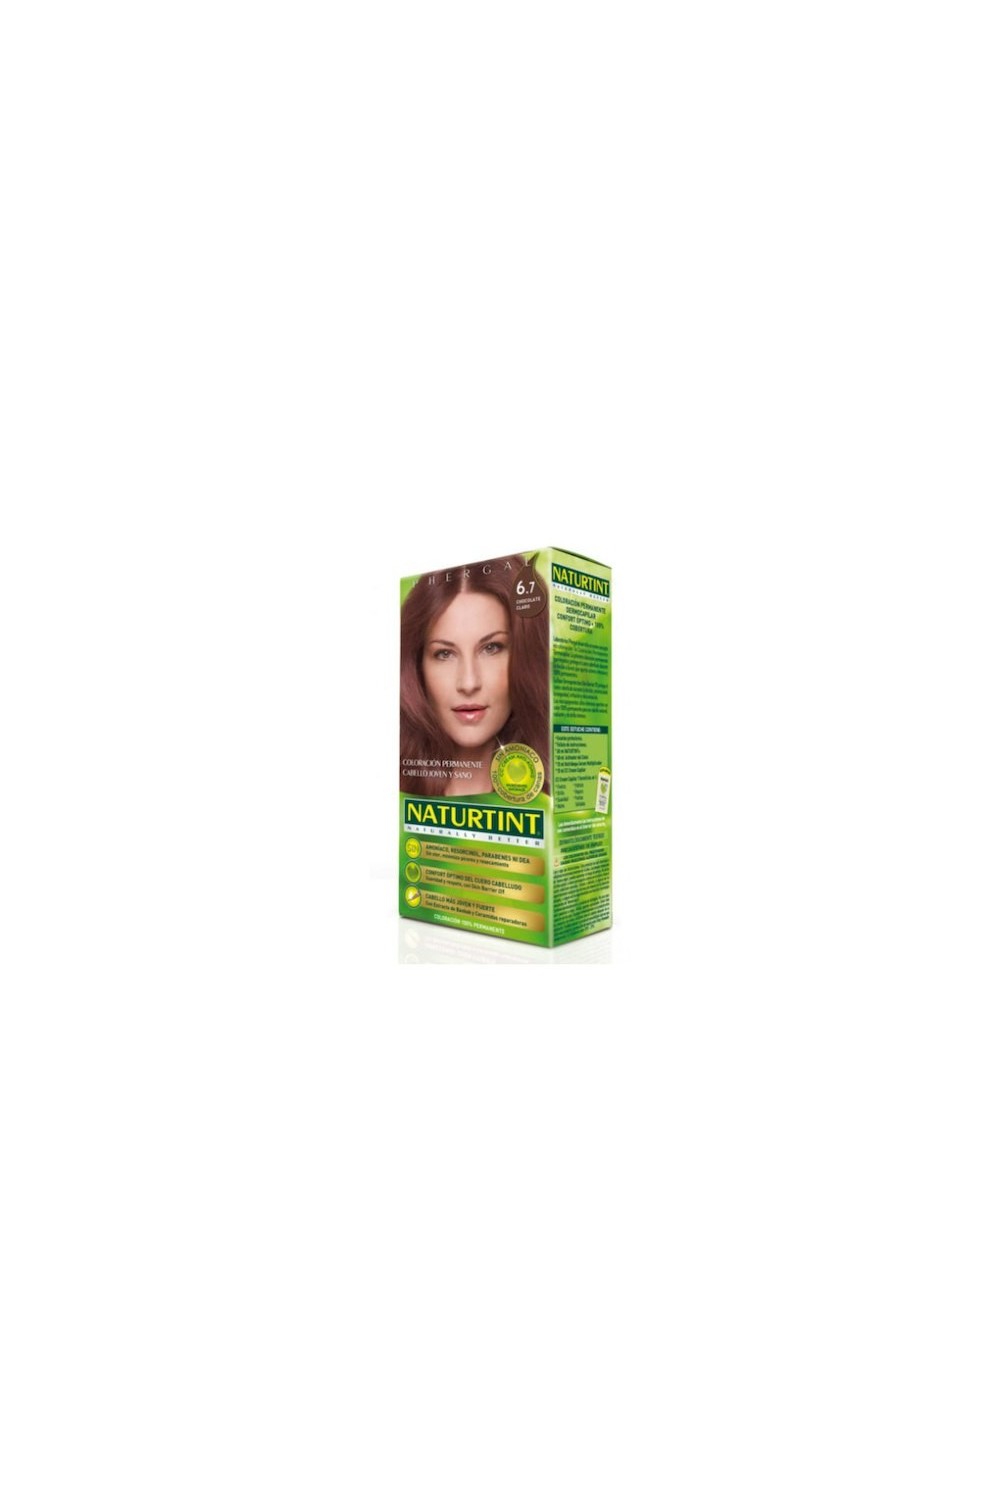 Naturtint  6.7 Ammonia Free Hair Colour 150ml